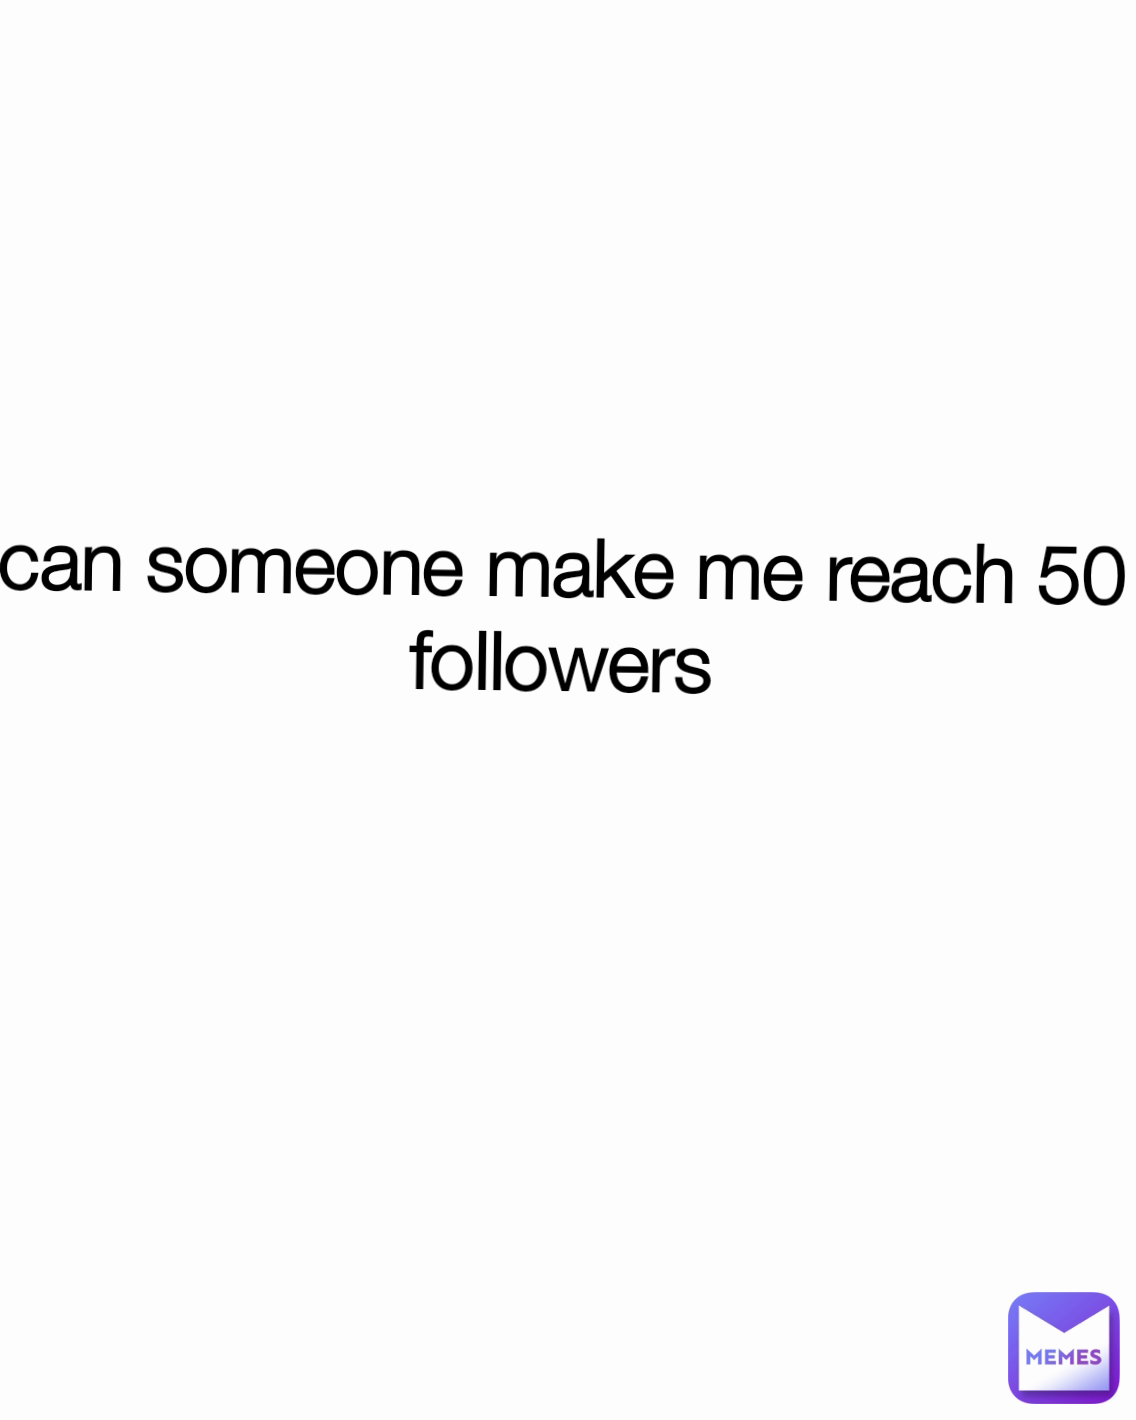 can someone make me reach 50 followers